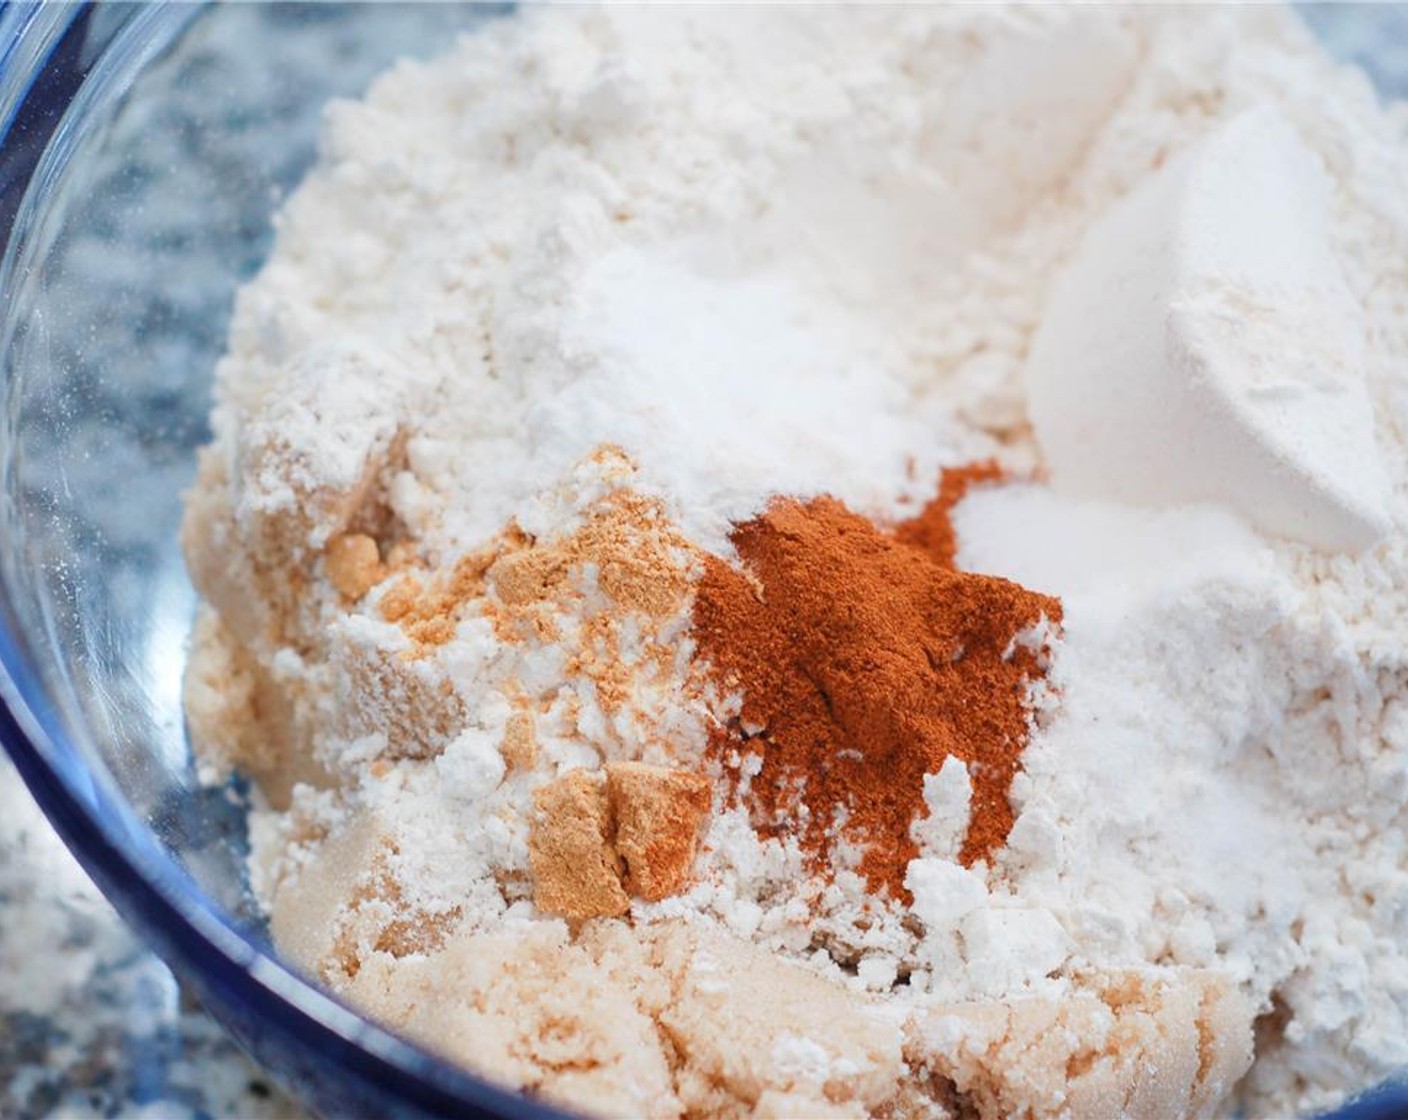 step 2 In a medium bowl, combine the Brown Sugar (2/3 cup), All-Purpose Flour (1 2/3 cups), Ground Cinnamon (3/4 tsp), Fresh Ginger (1/4 tsp), Baking Soda (1 tsp), and Salt (1/2 tsp).